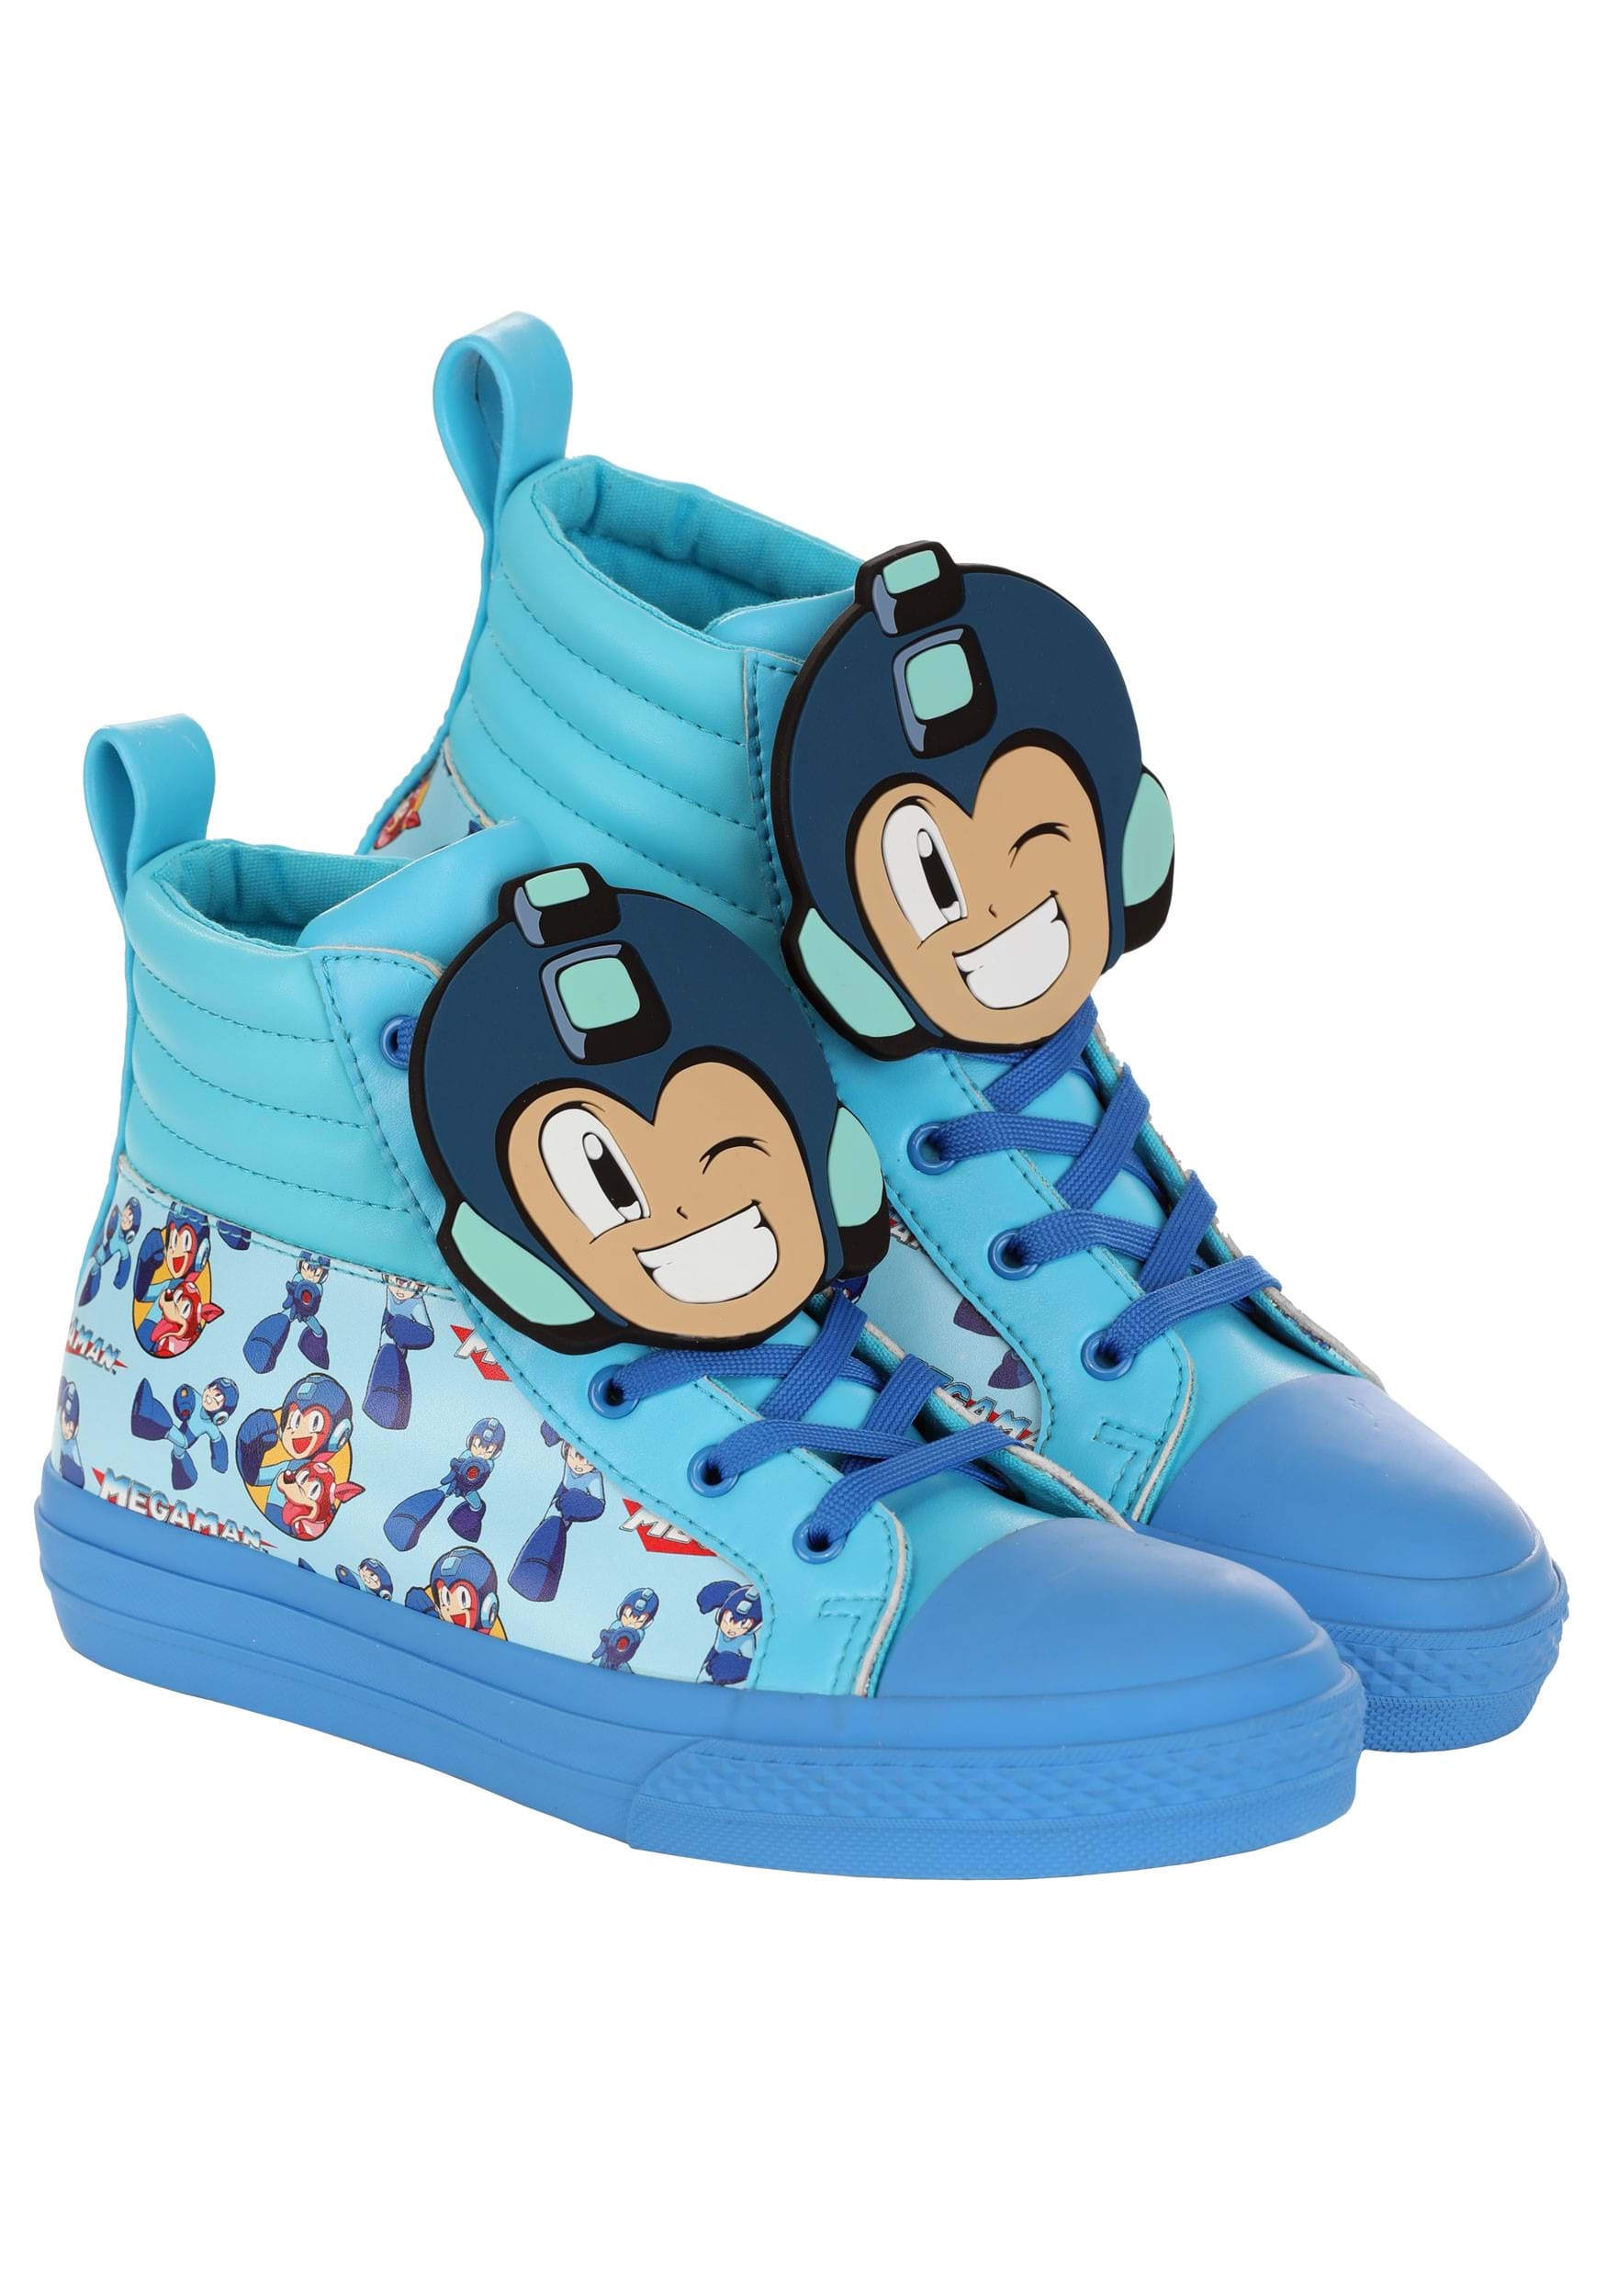 Adult Mega Man High Top Sneaker , Mega Man Apparel